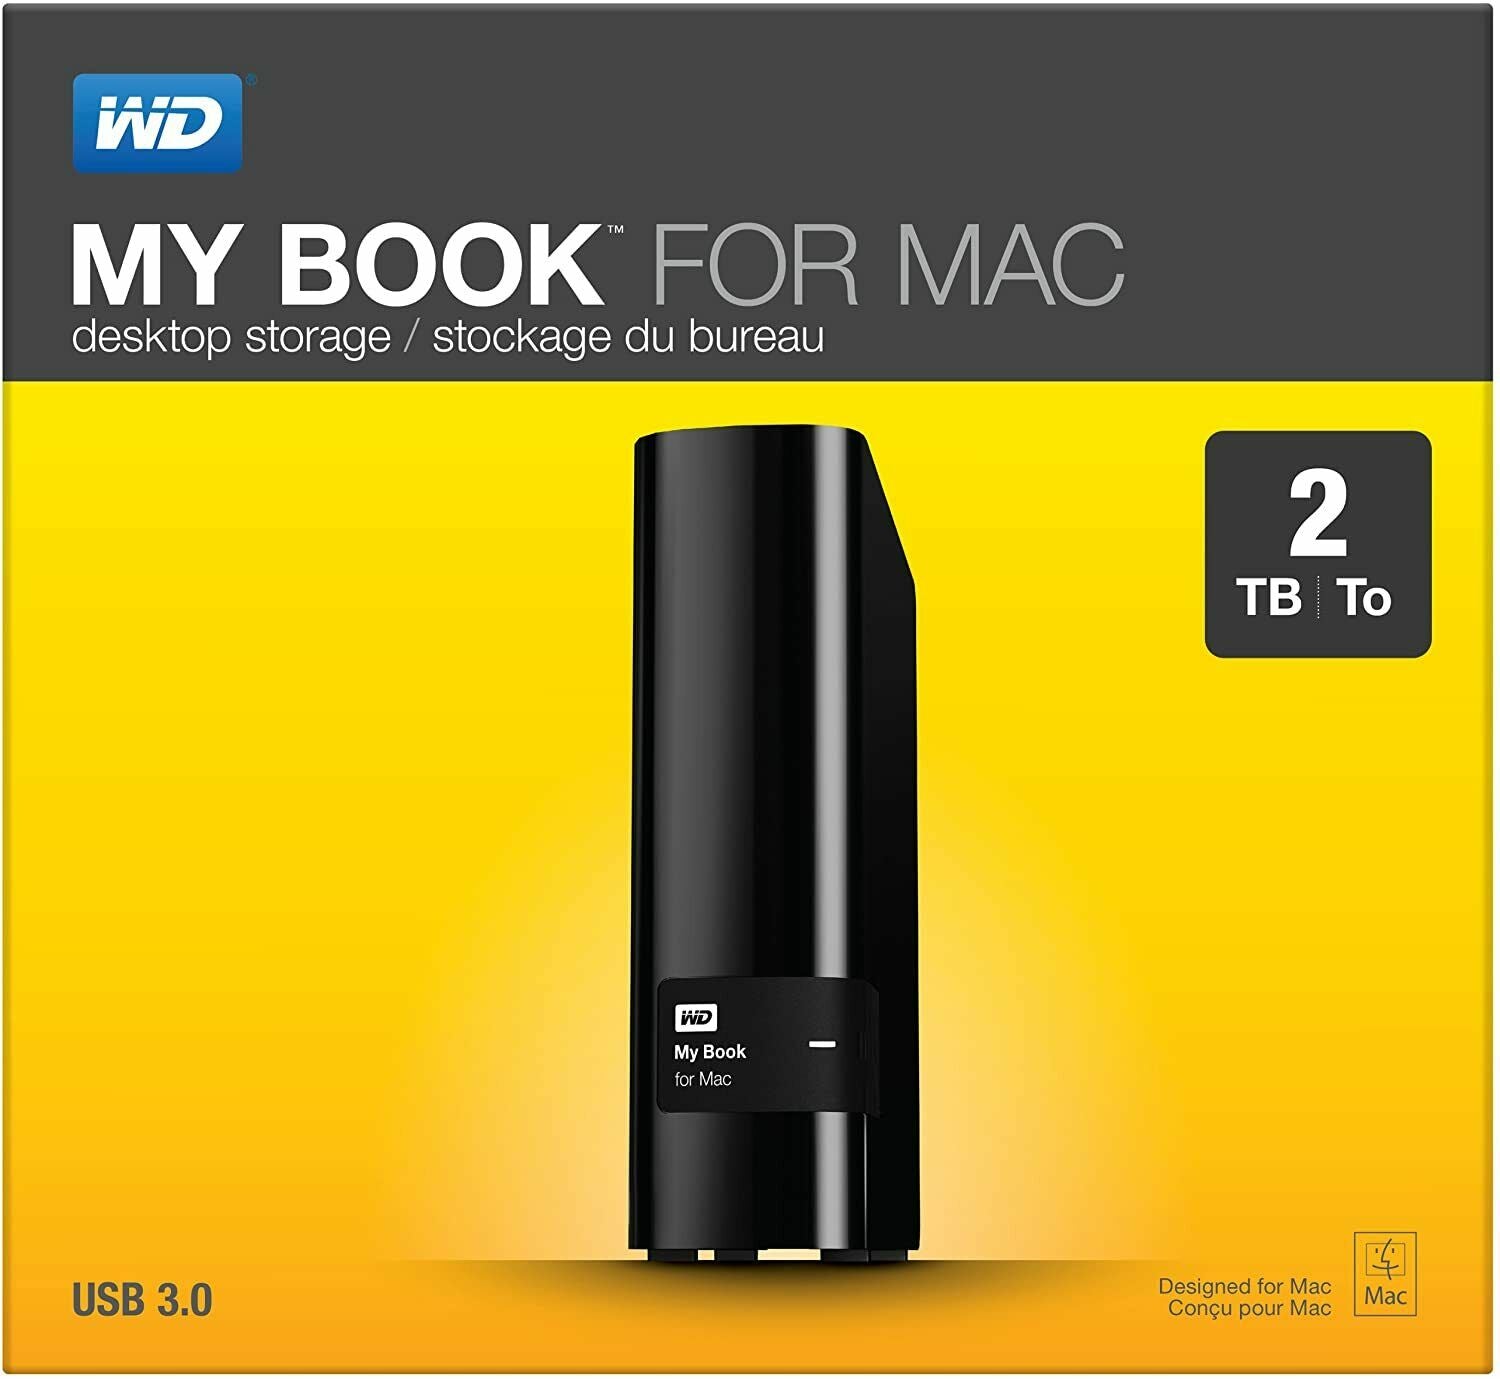 New WD My Book for Mac 2TB USB 3.0 Desktop External Hard Drive, WDBYCC0020HBK